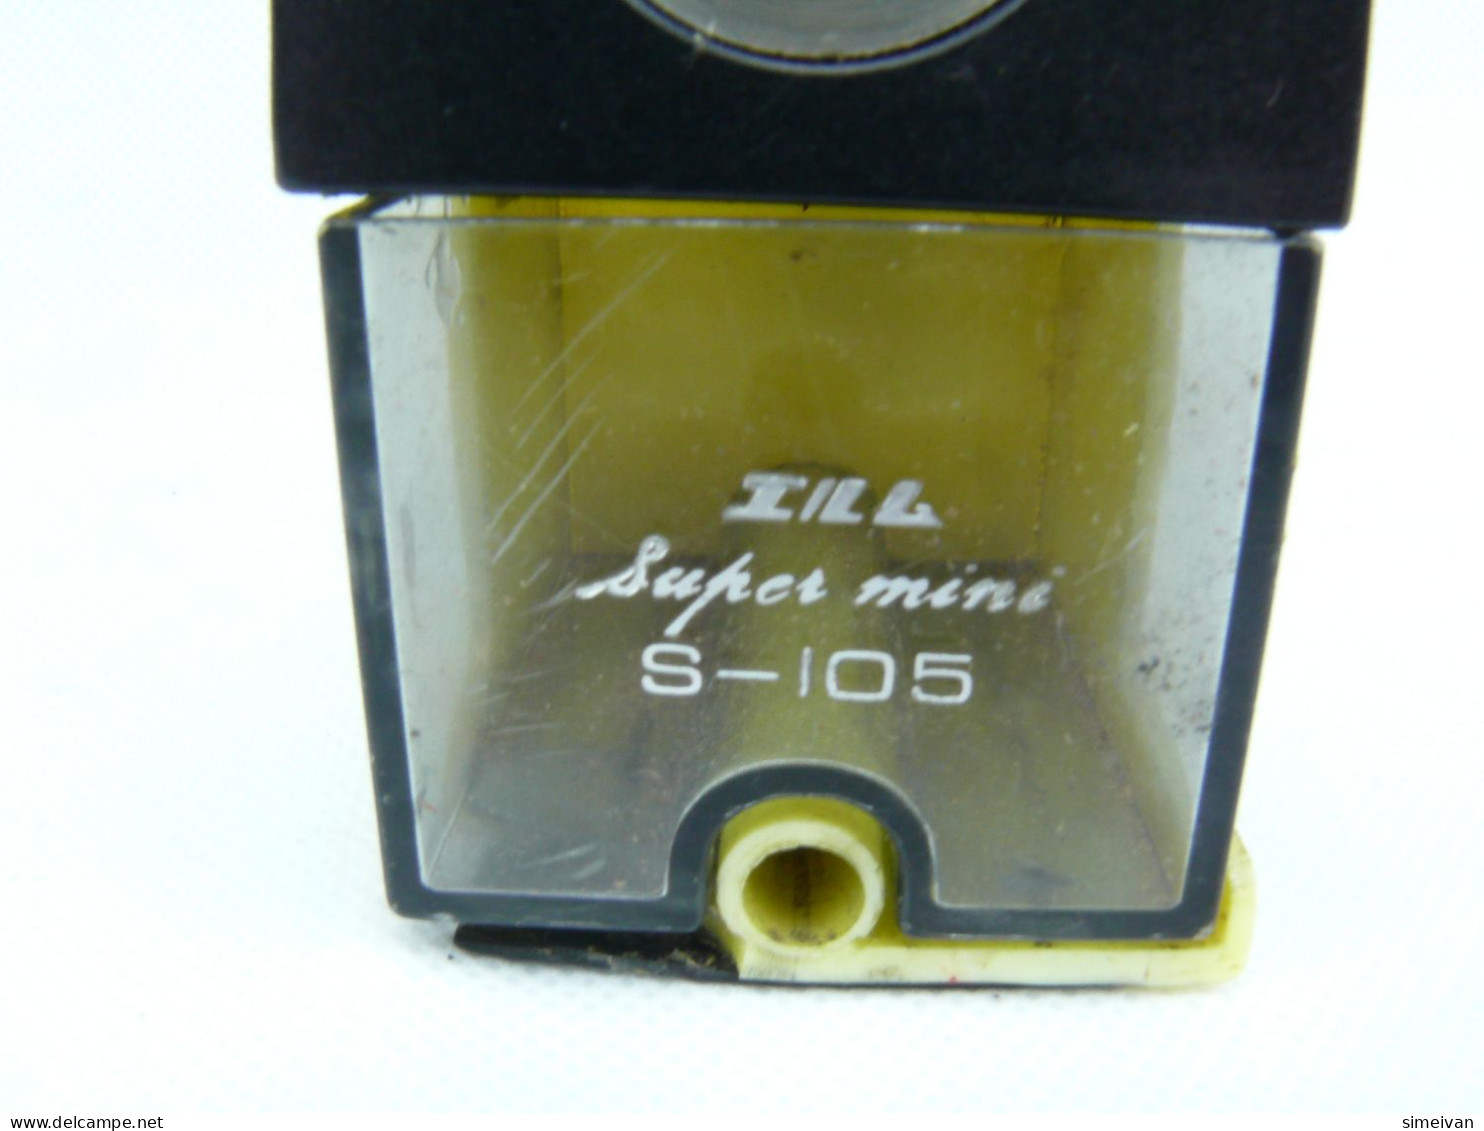 Vintage ELM Super Mini "S-105" Manual Pencil Sharpener Made in Japan #2313